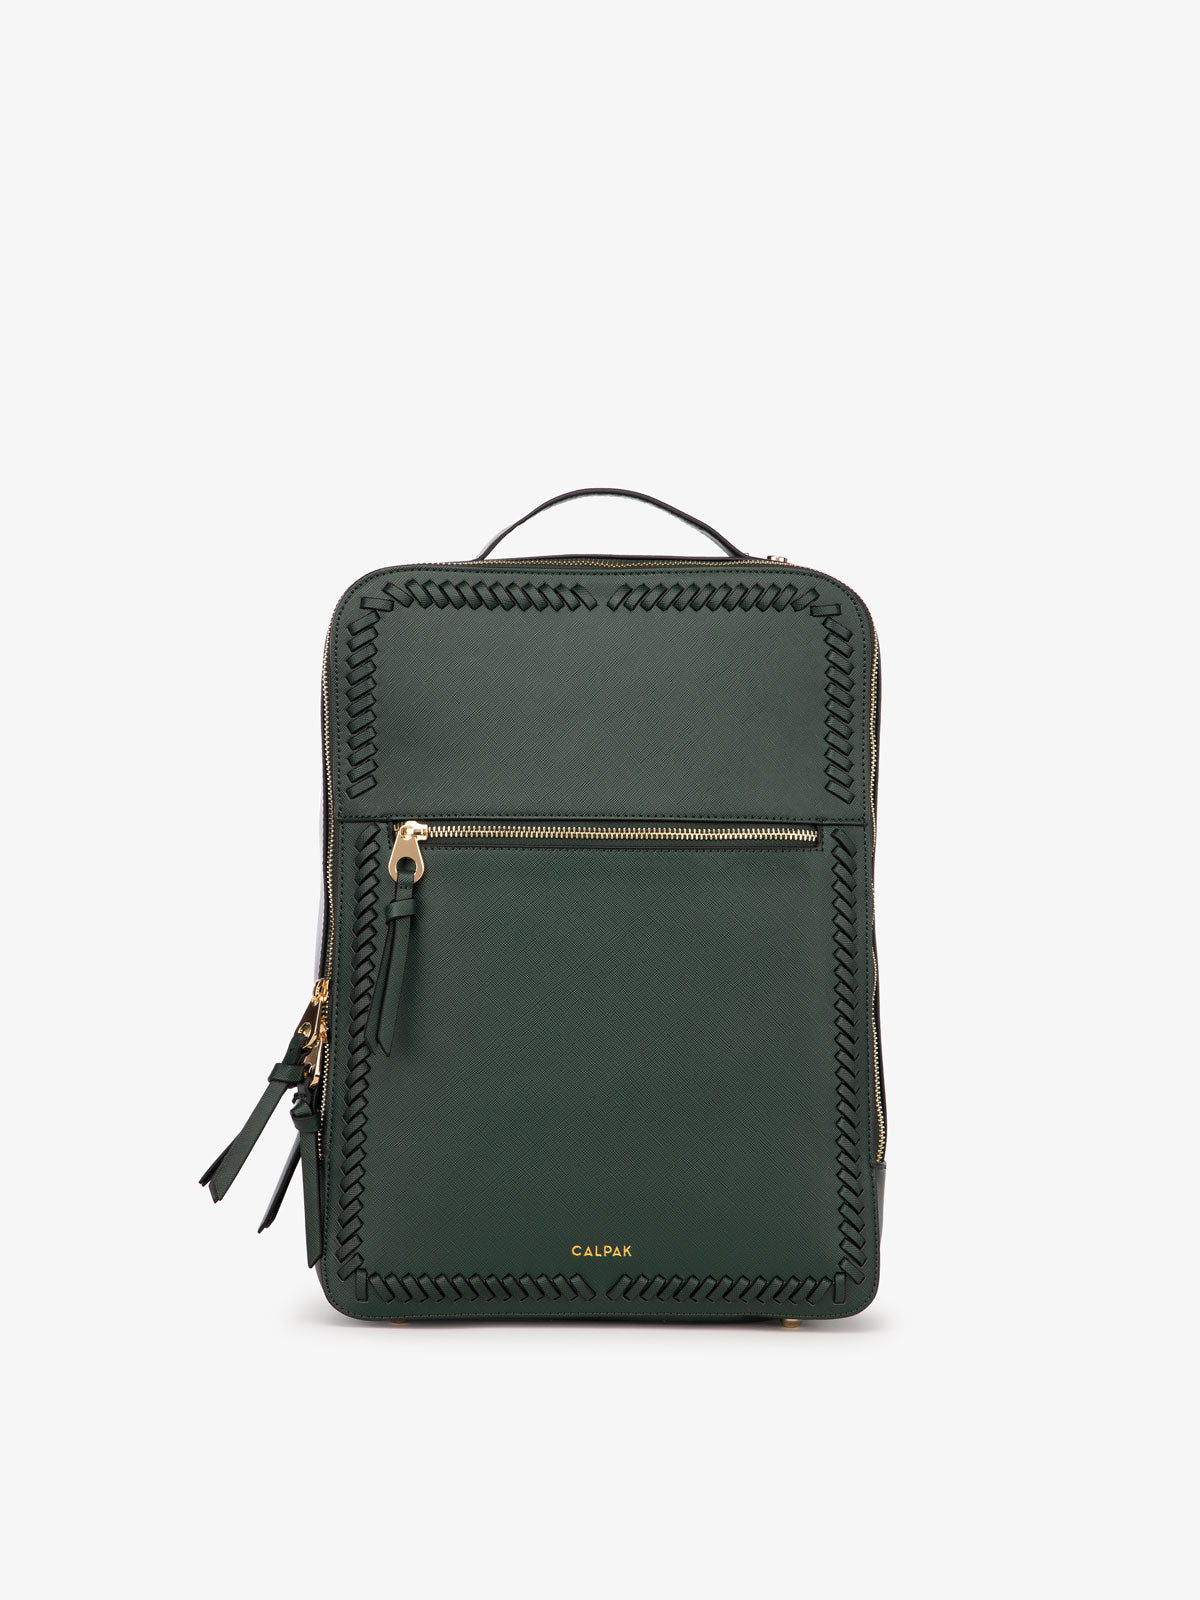 emerald green CALPAK Kaya Laptop Backpack for 15 inch laptop